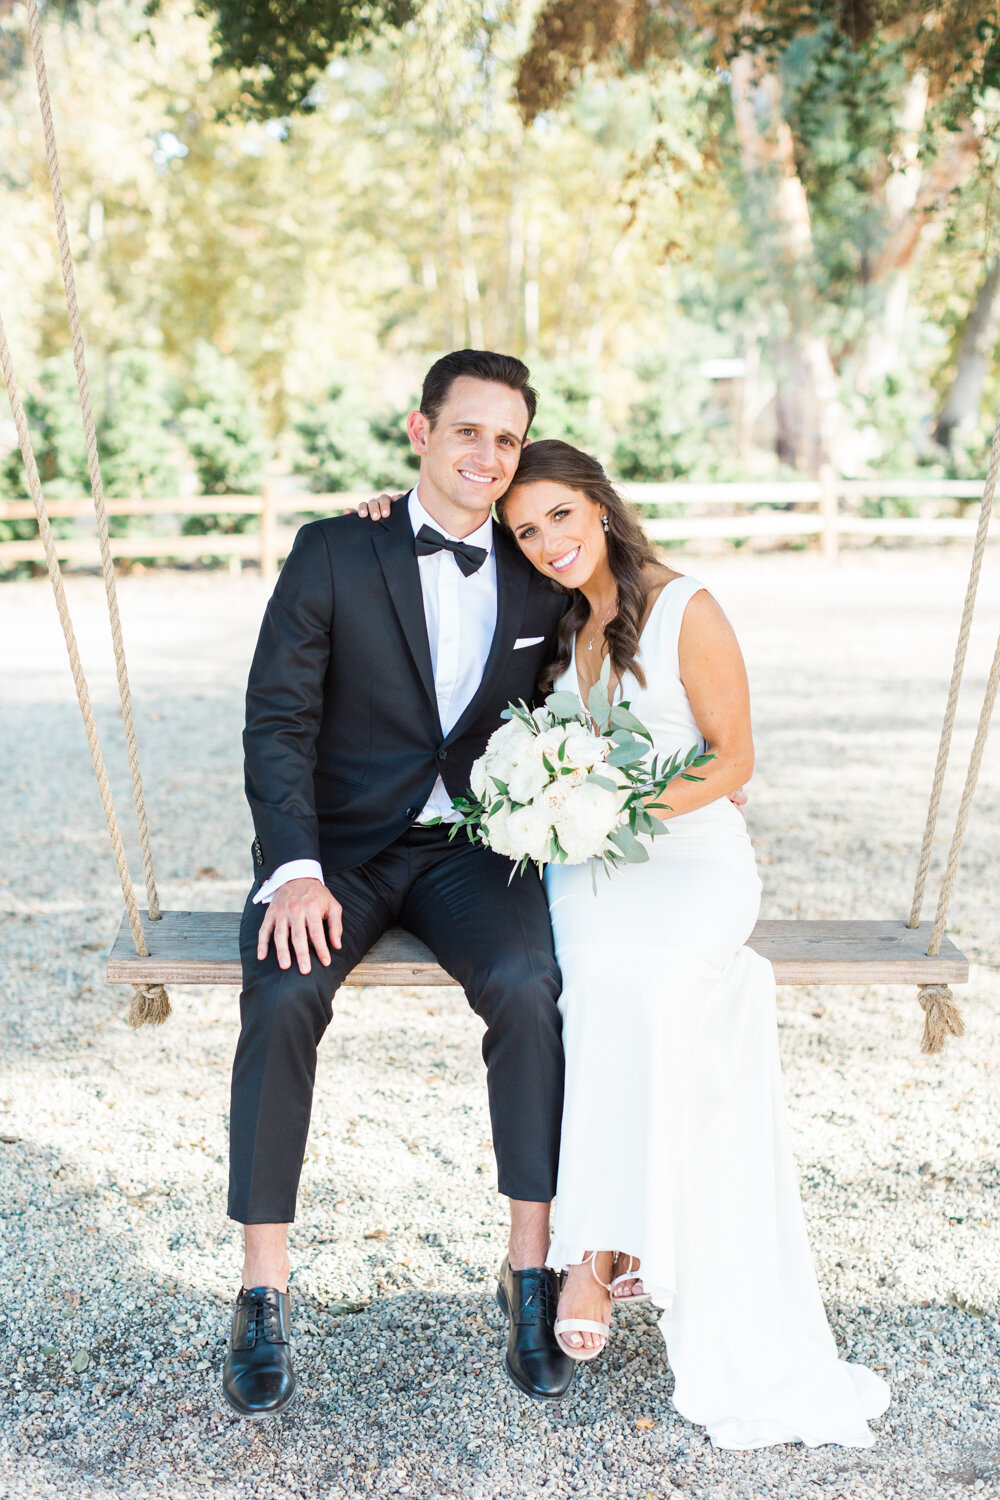 wisteria-photography.com | Wisteria Photography | Triunfo Creek Vineyards | Weddings Engagement | Southern California Photographer-19.jpg